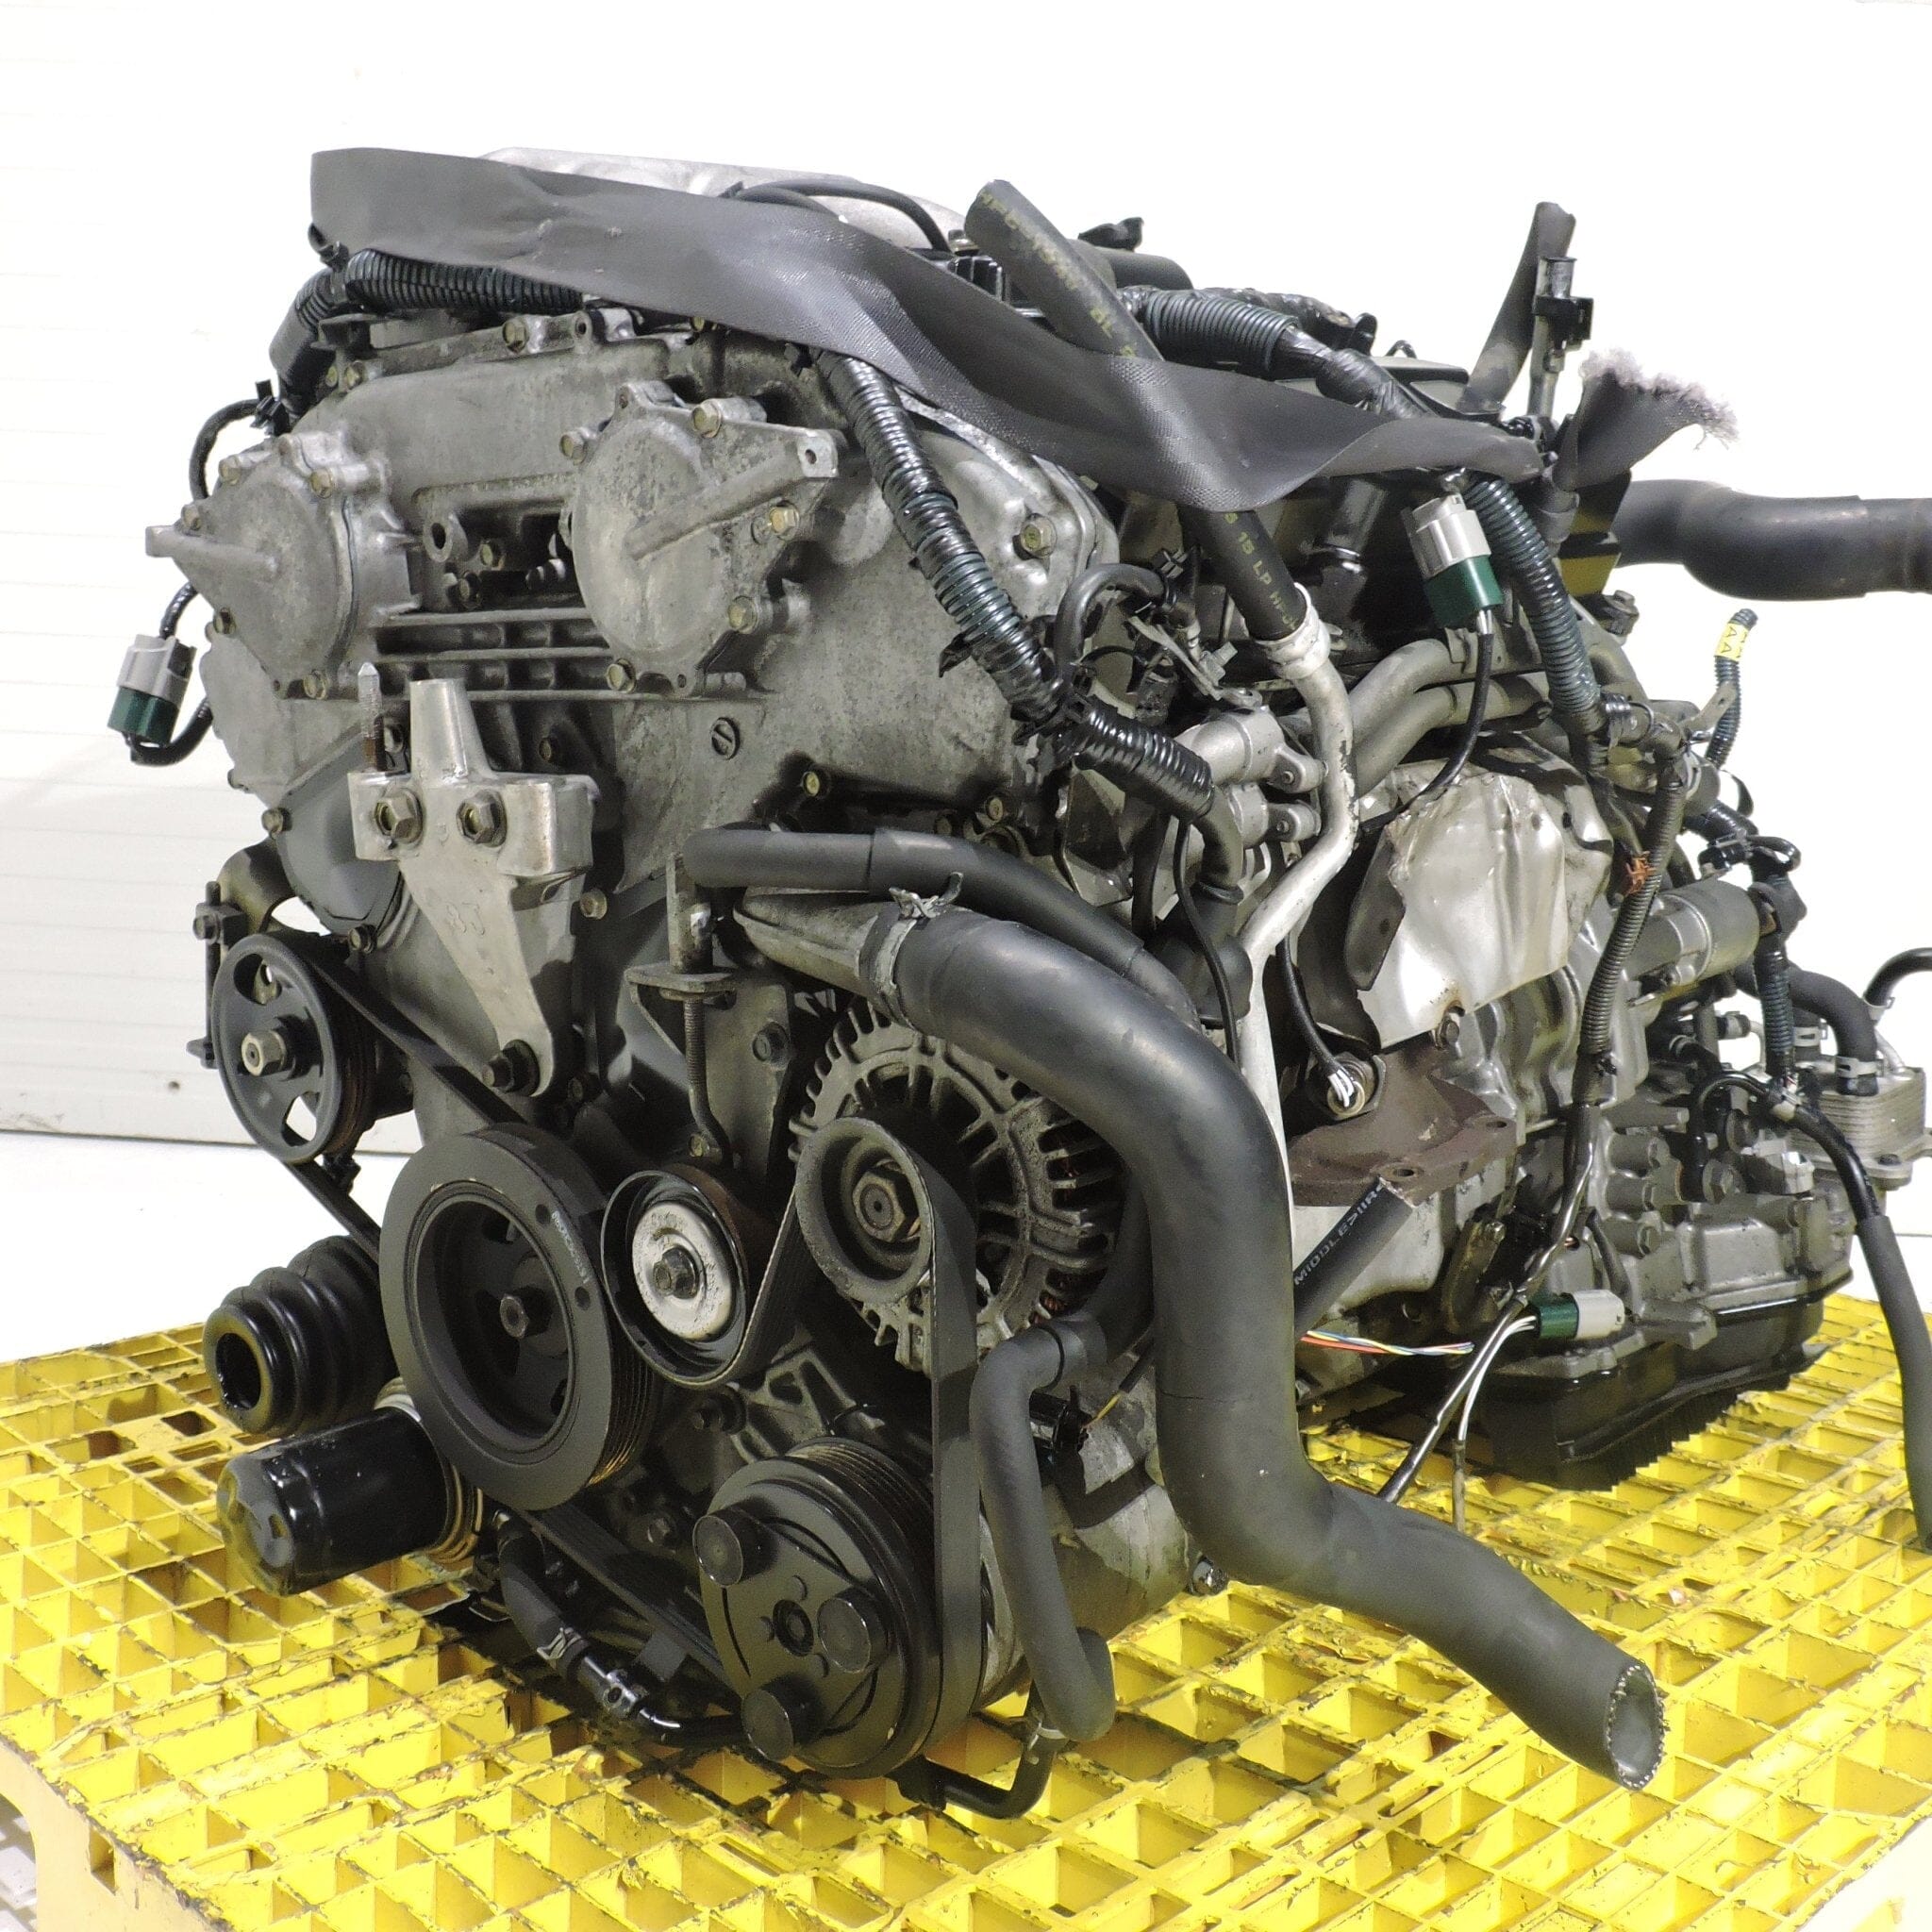 Nissan Murano 2003-2007 3.5L V6 JDM Engine - VQ35DE